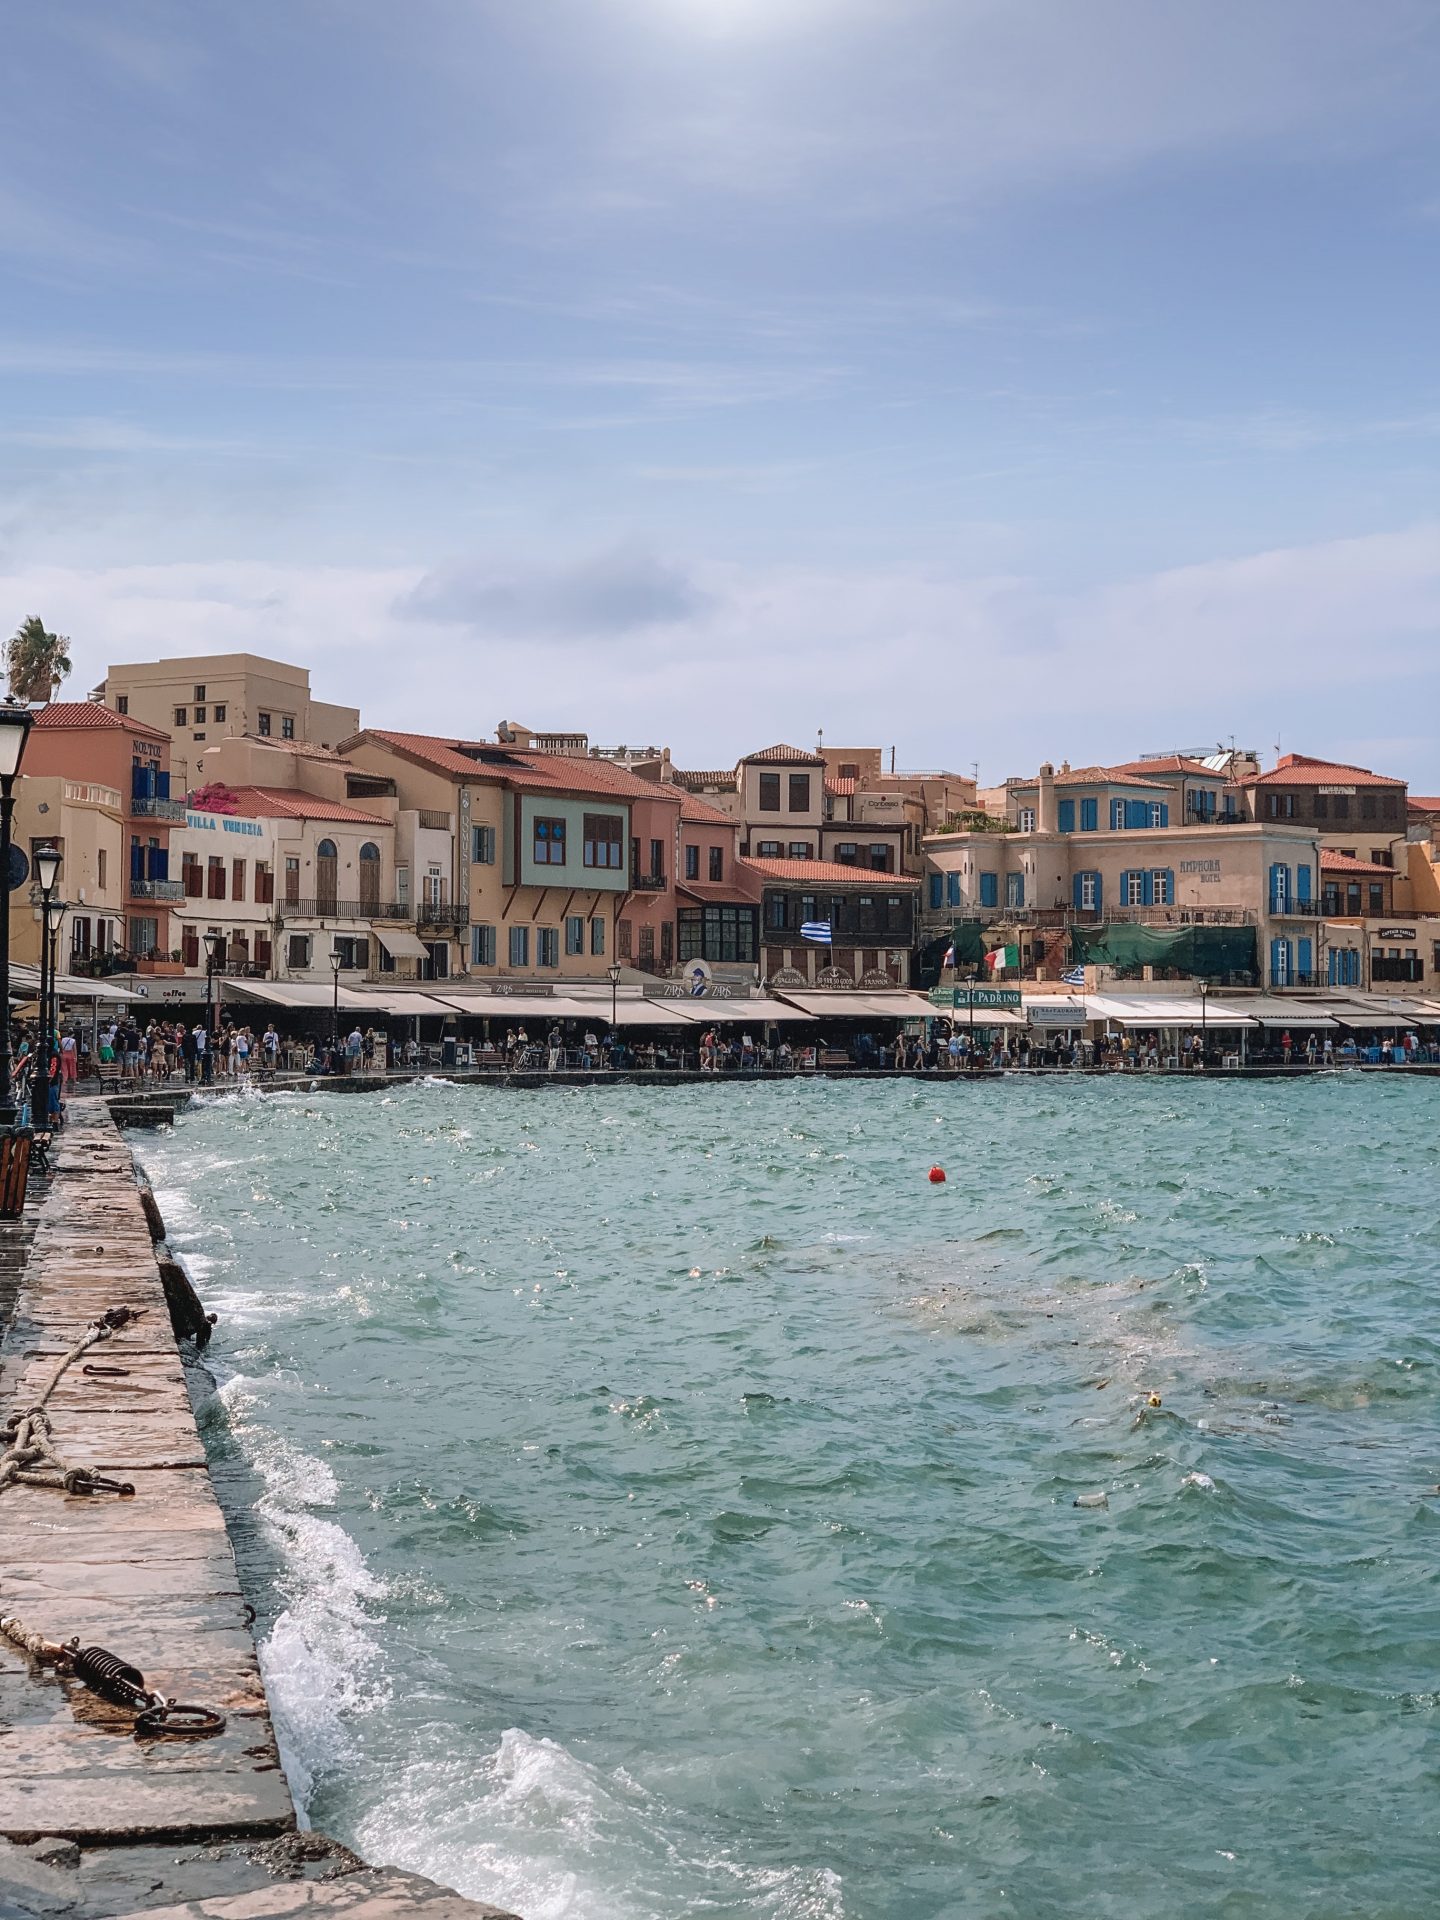 Chania’s Venetian Harbour, Crete Greece